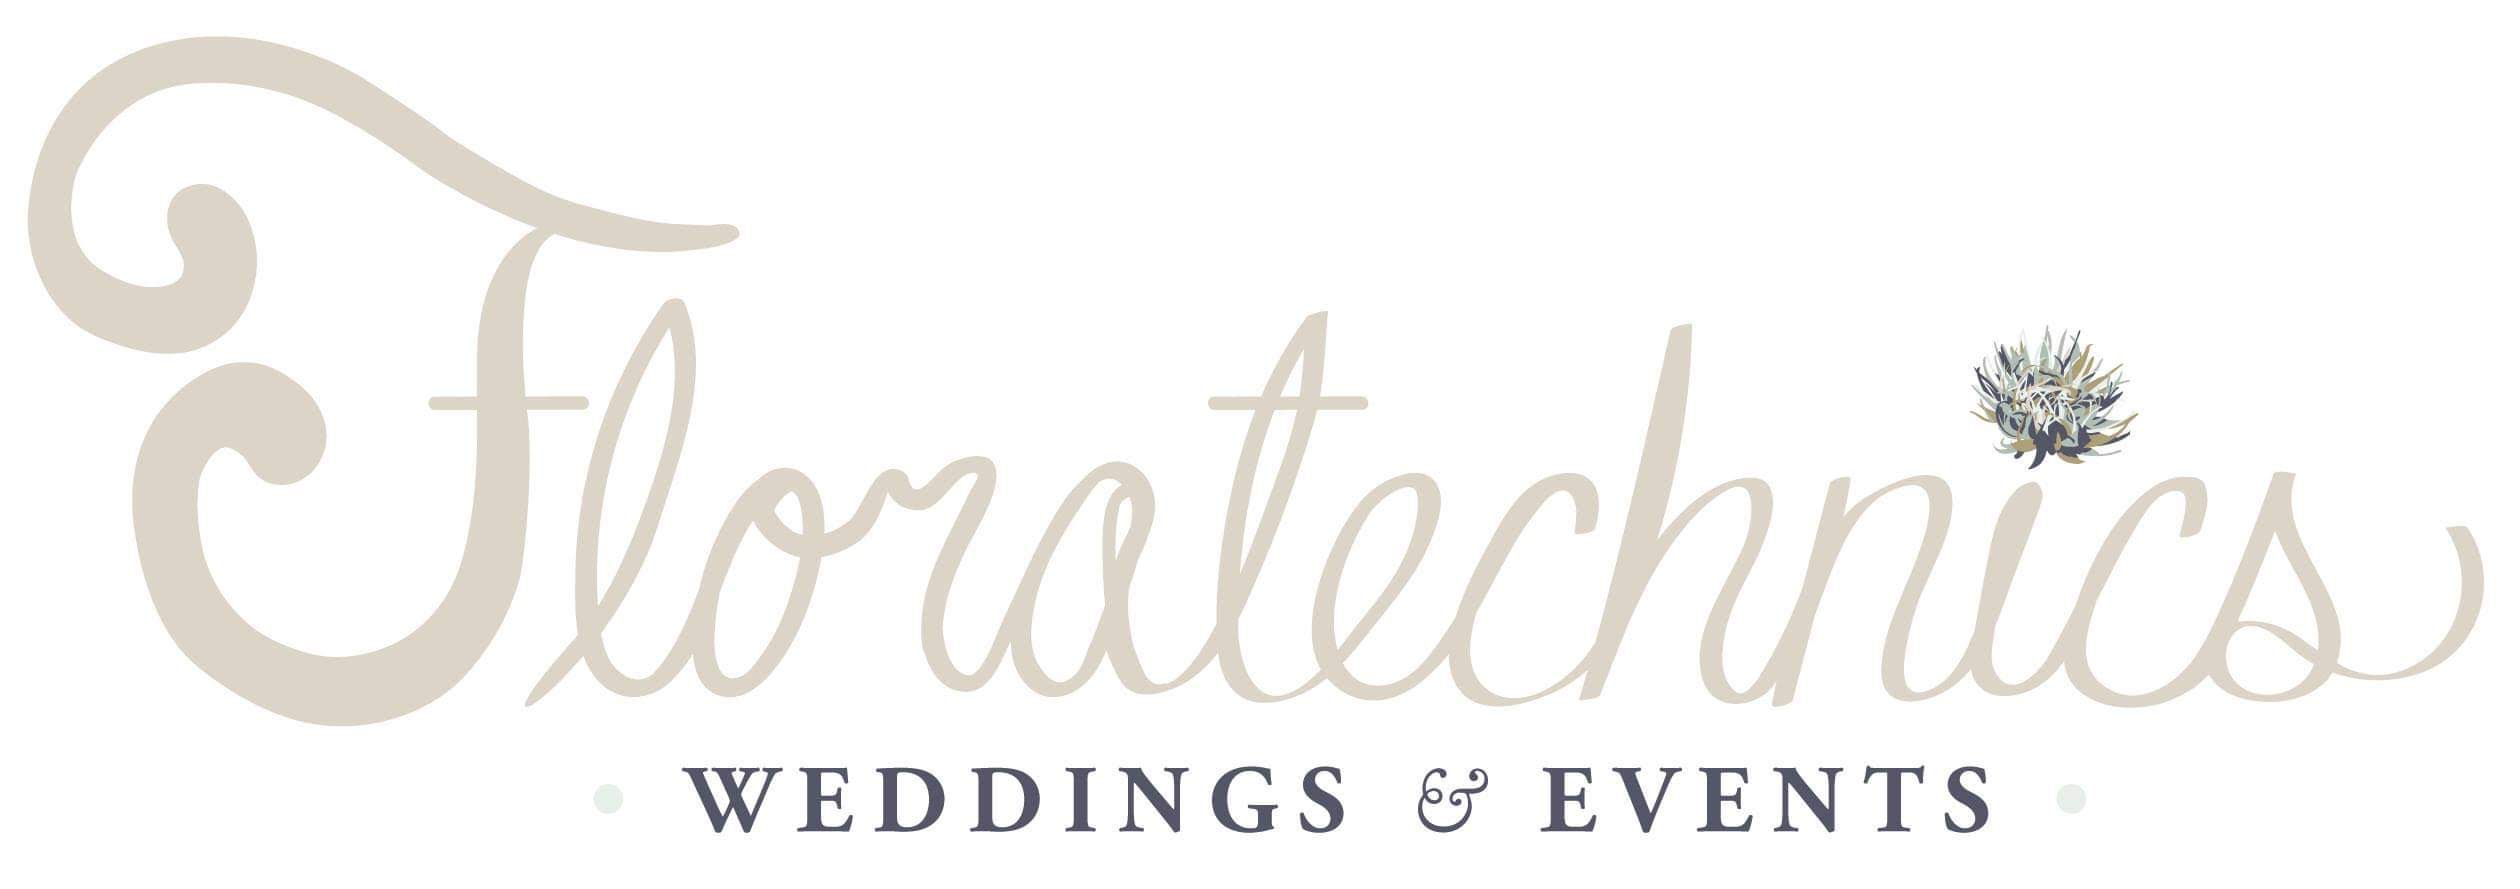 Floratechnics Weddings & Events